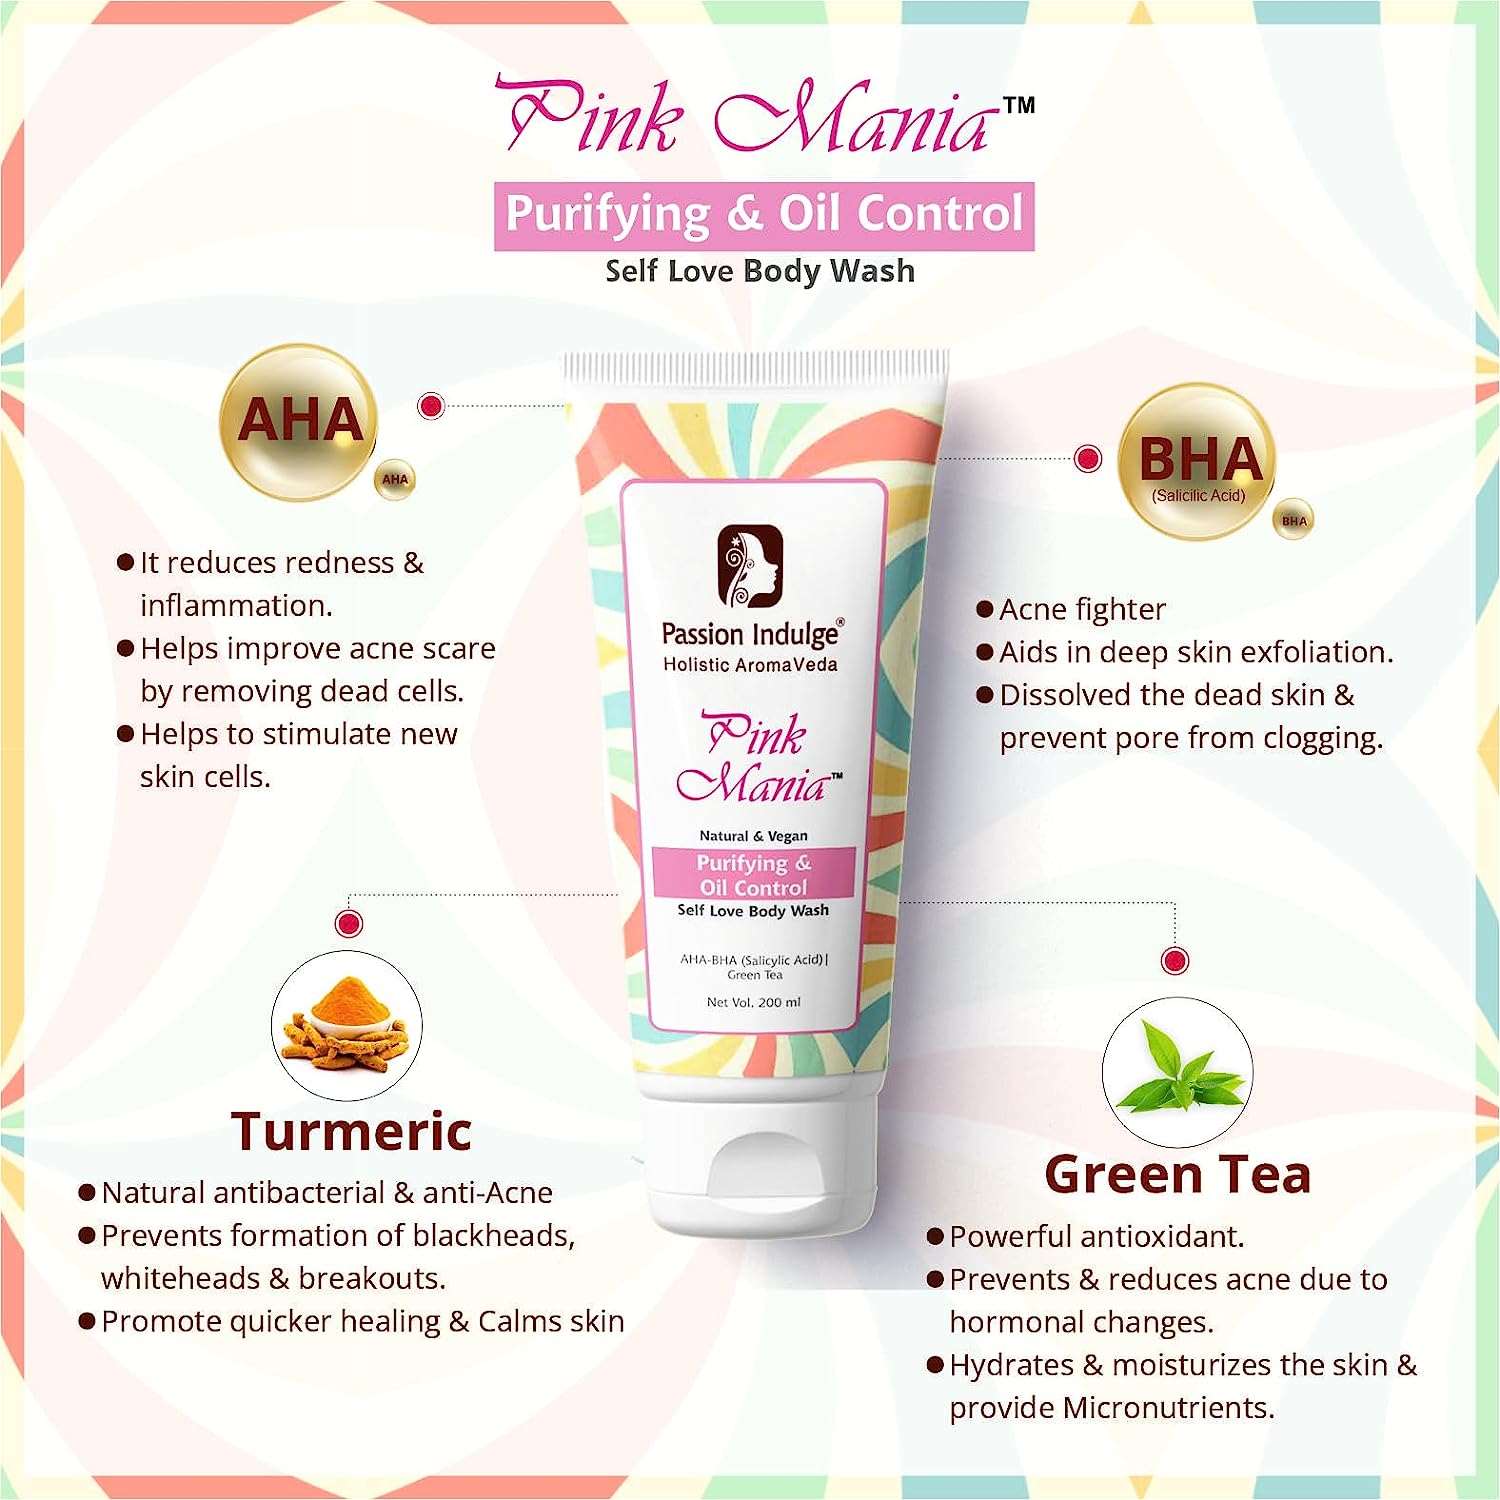 Passion Indulge Pink Mania AHA BHA Anti-Dandruff & Hair Fall Control Shampoo & Oil Controlling Body Wash Combo For Healthy Skin With Turmeric & Green Tea Extract |  Reduce Hair Fall & Moisturizing Skin